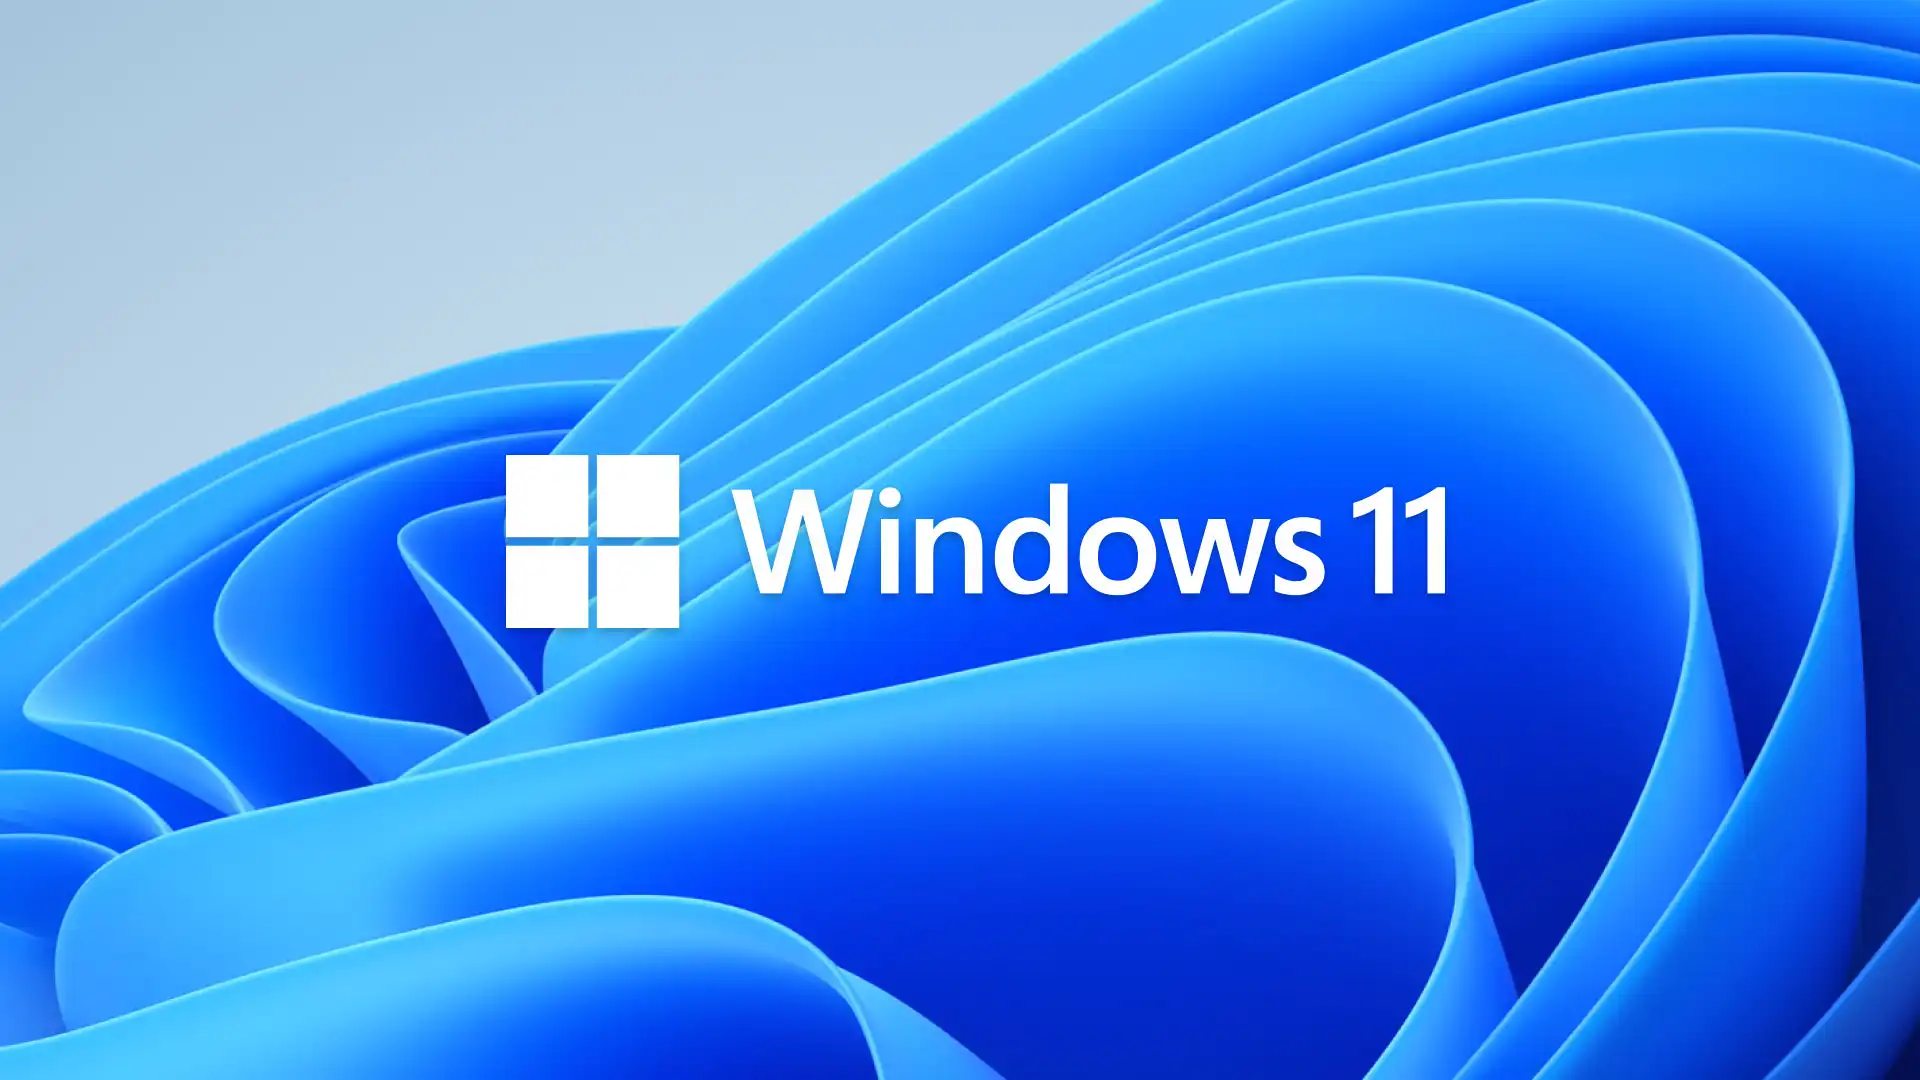 Microsoft Swiftkey: Windows 11 Brings AI Chat to Your Keyboard